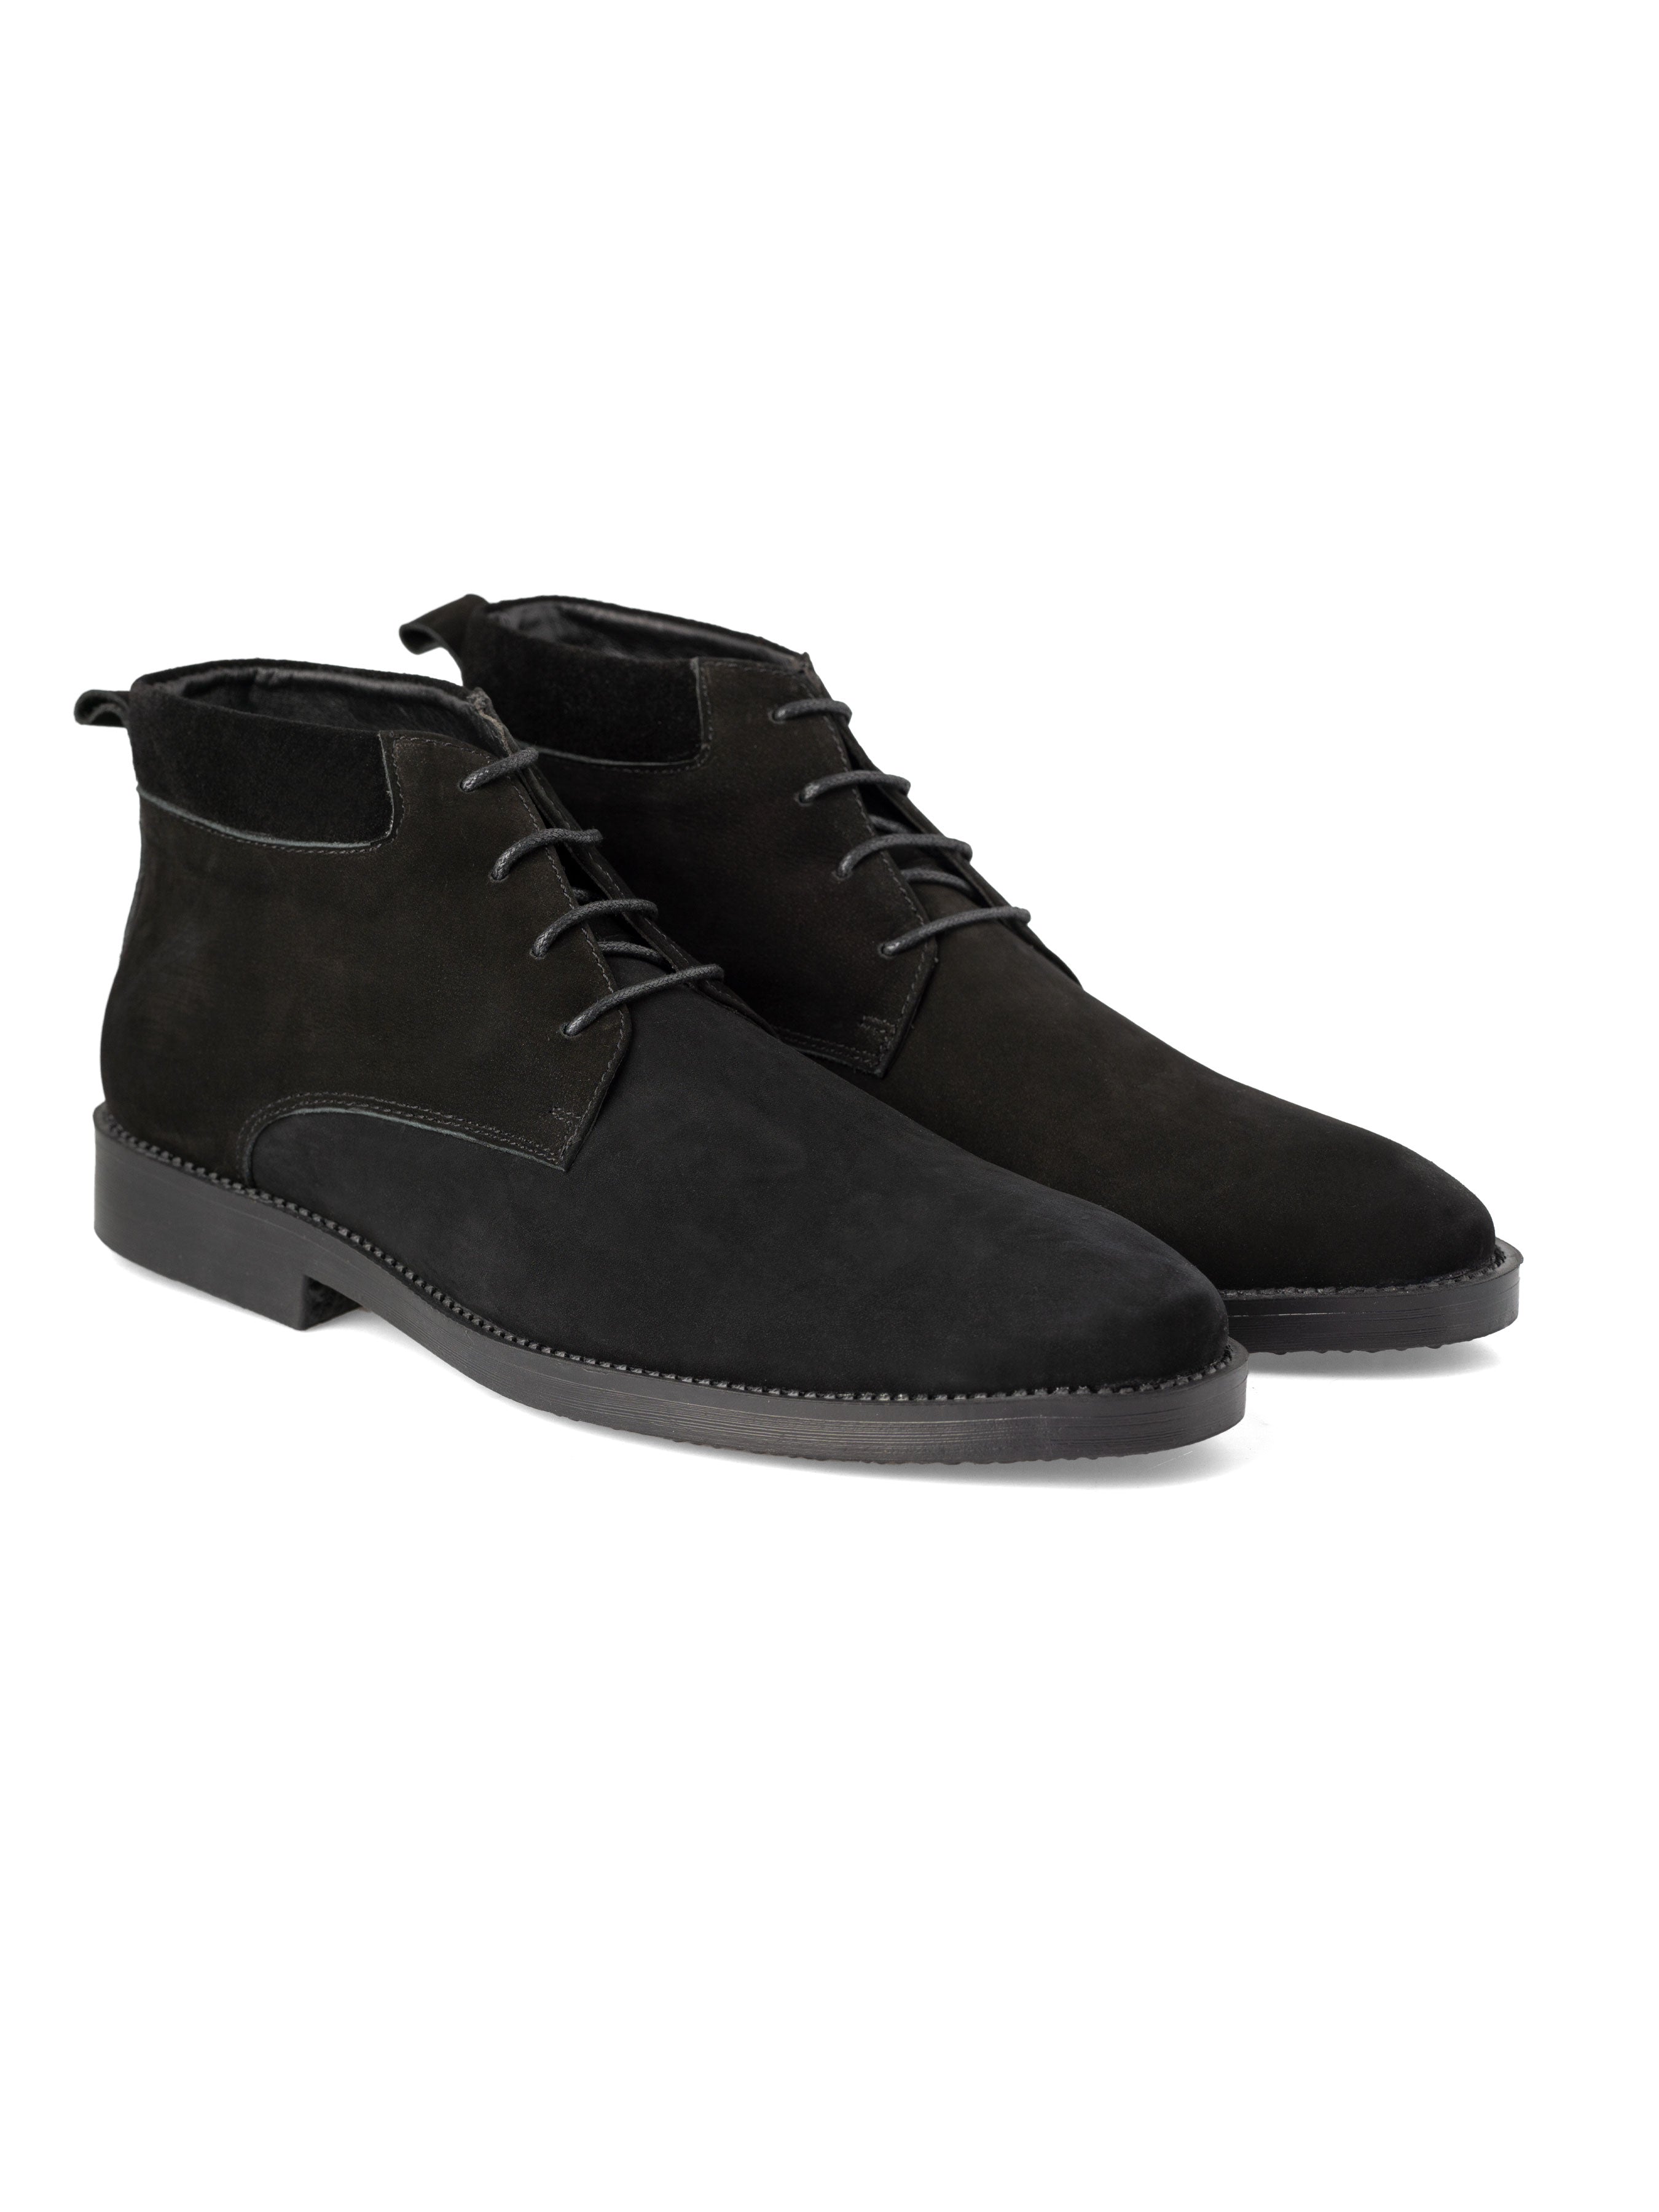 Hunter Chukka Boots - Black Nubuck Leather (Crepe Sole) - Zeve Shoes